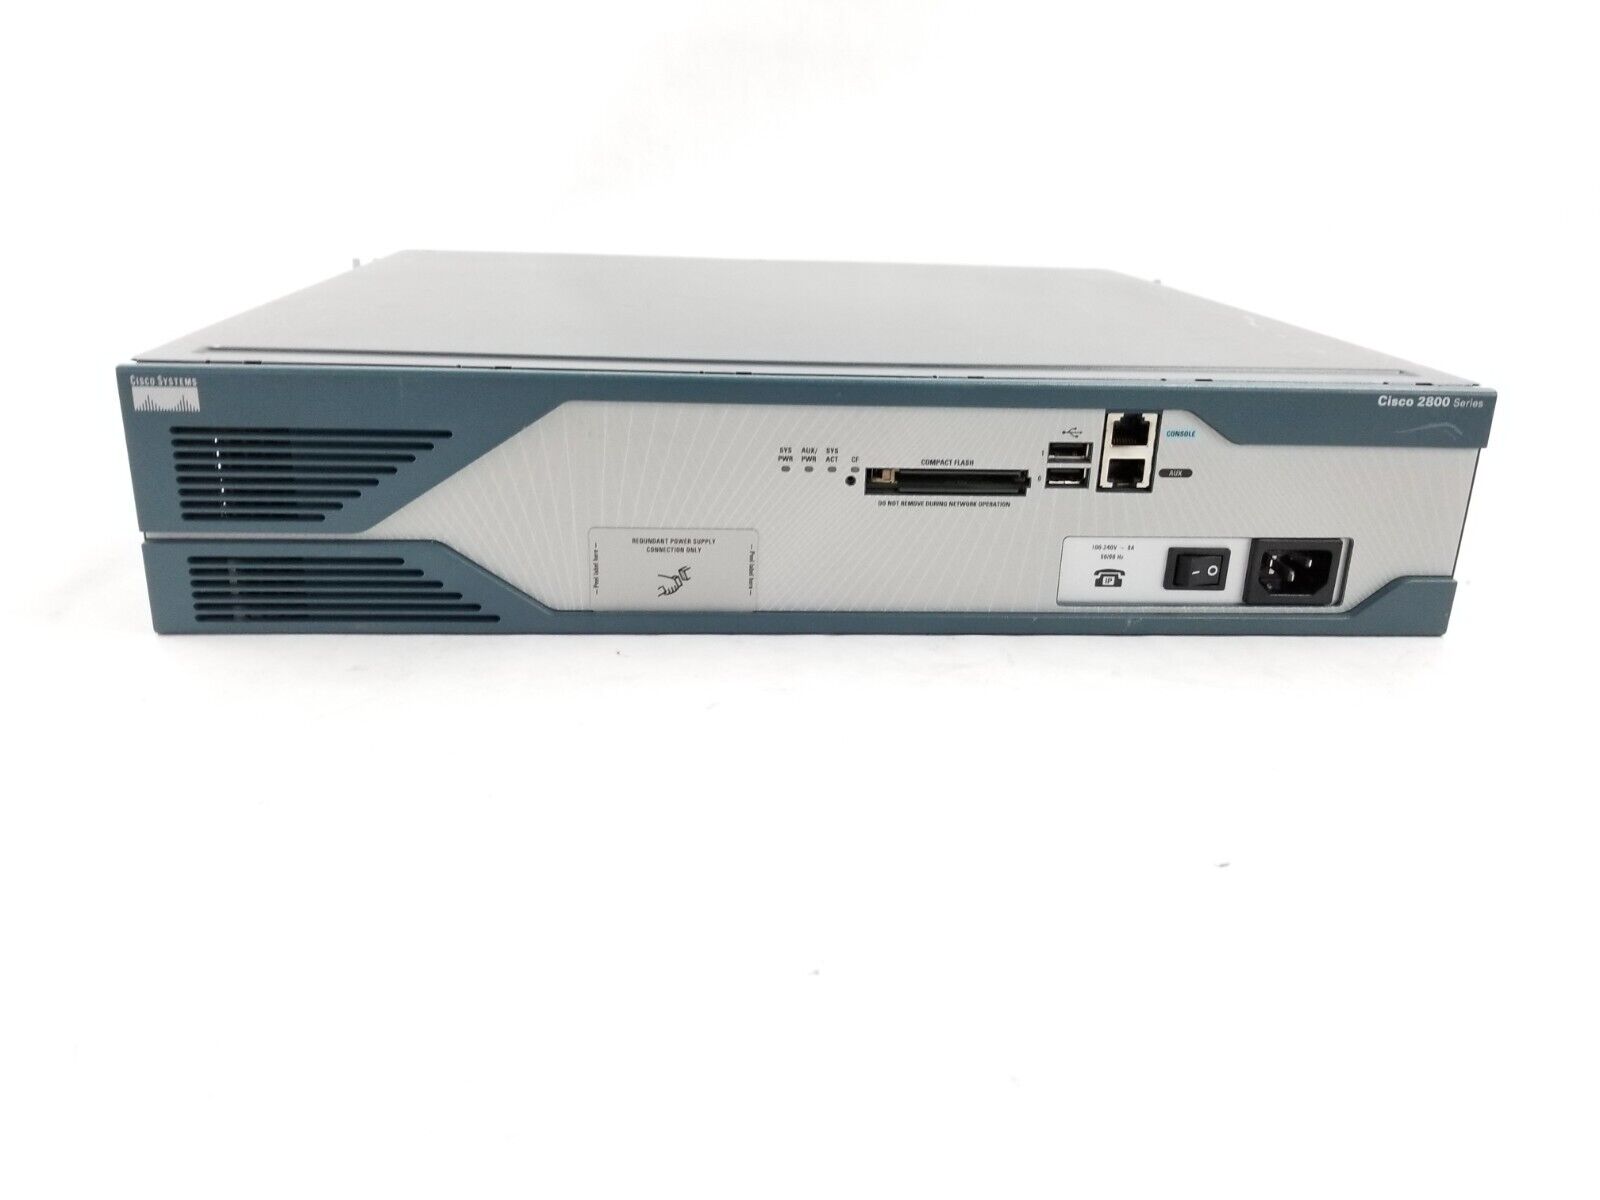 Cisco 2800 Series Integrated Service Router CISCO 2821 V05